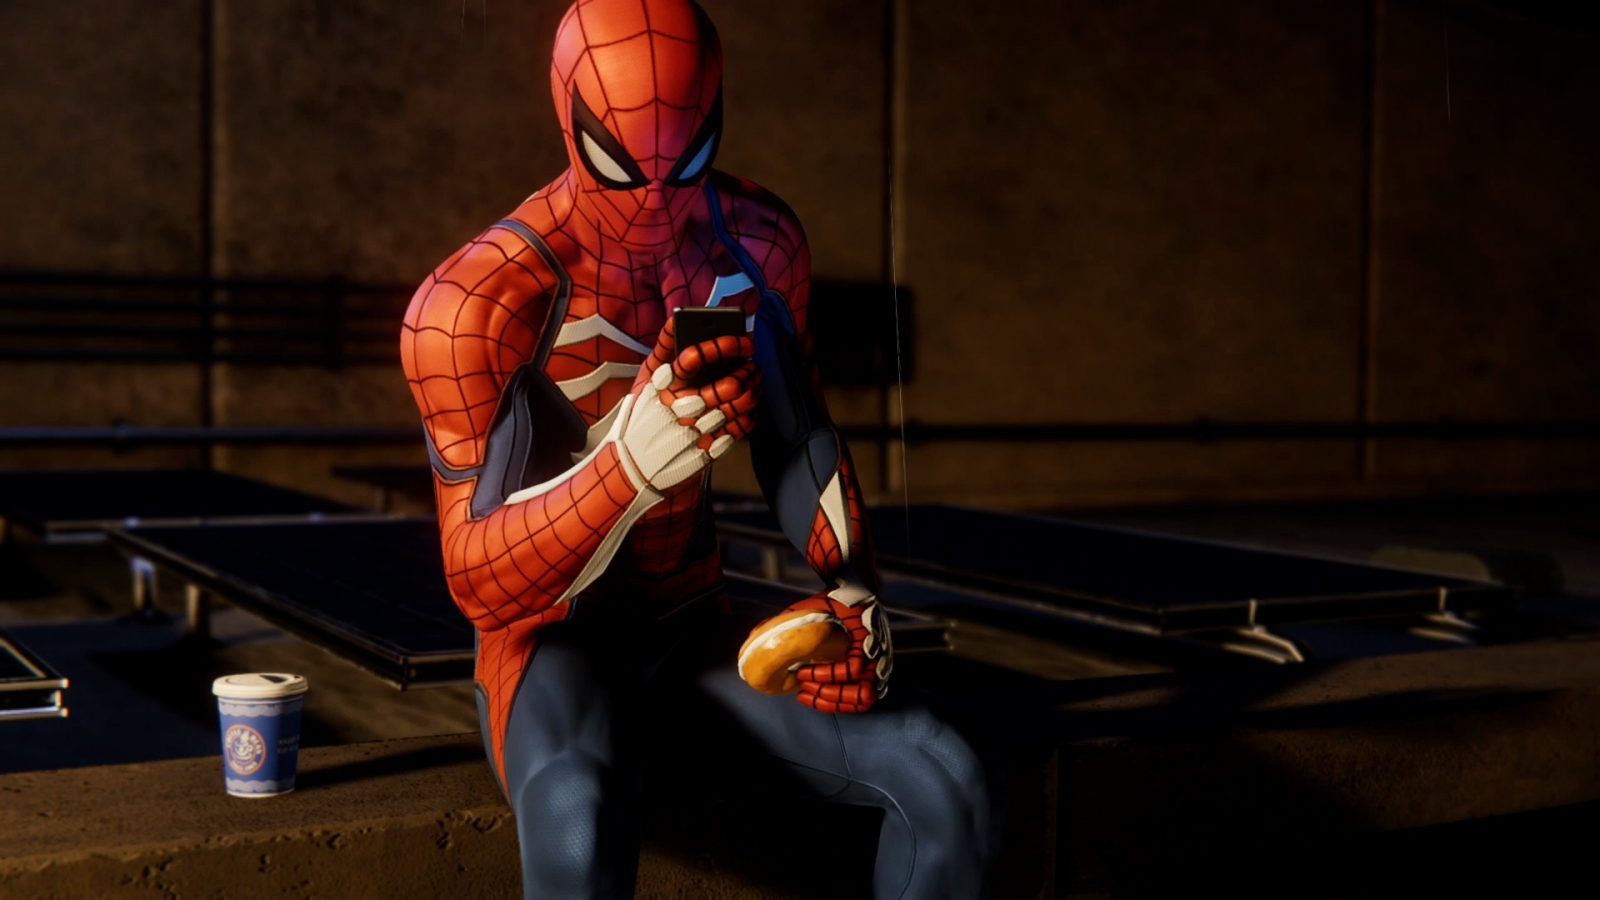 https://static1.thegamerimages.com/wordpress/wp-content/uploads/2018/09/Marvels-Spider-Man-Phone-and-Donut-e1536614707757.jpg